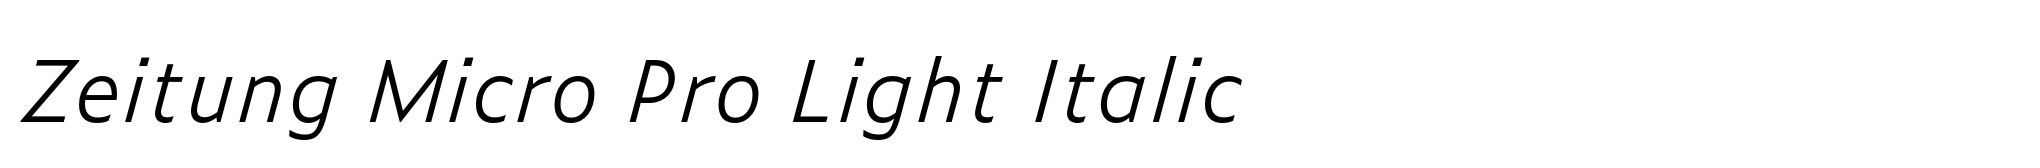 Zeitung Micro Pro Light Italic image